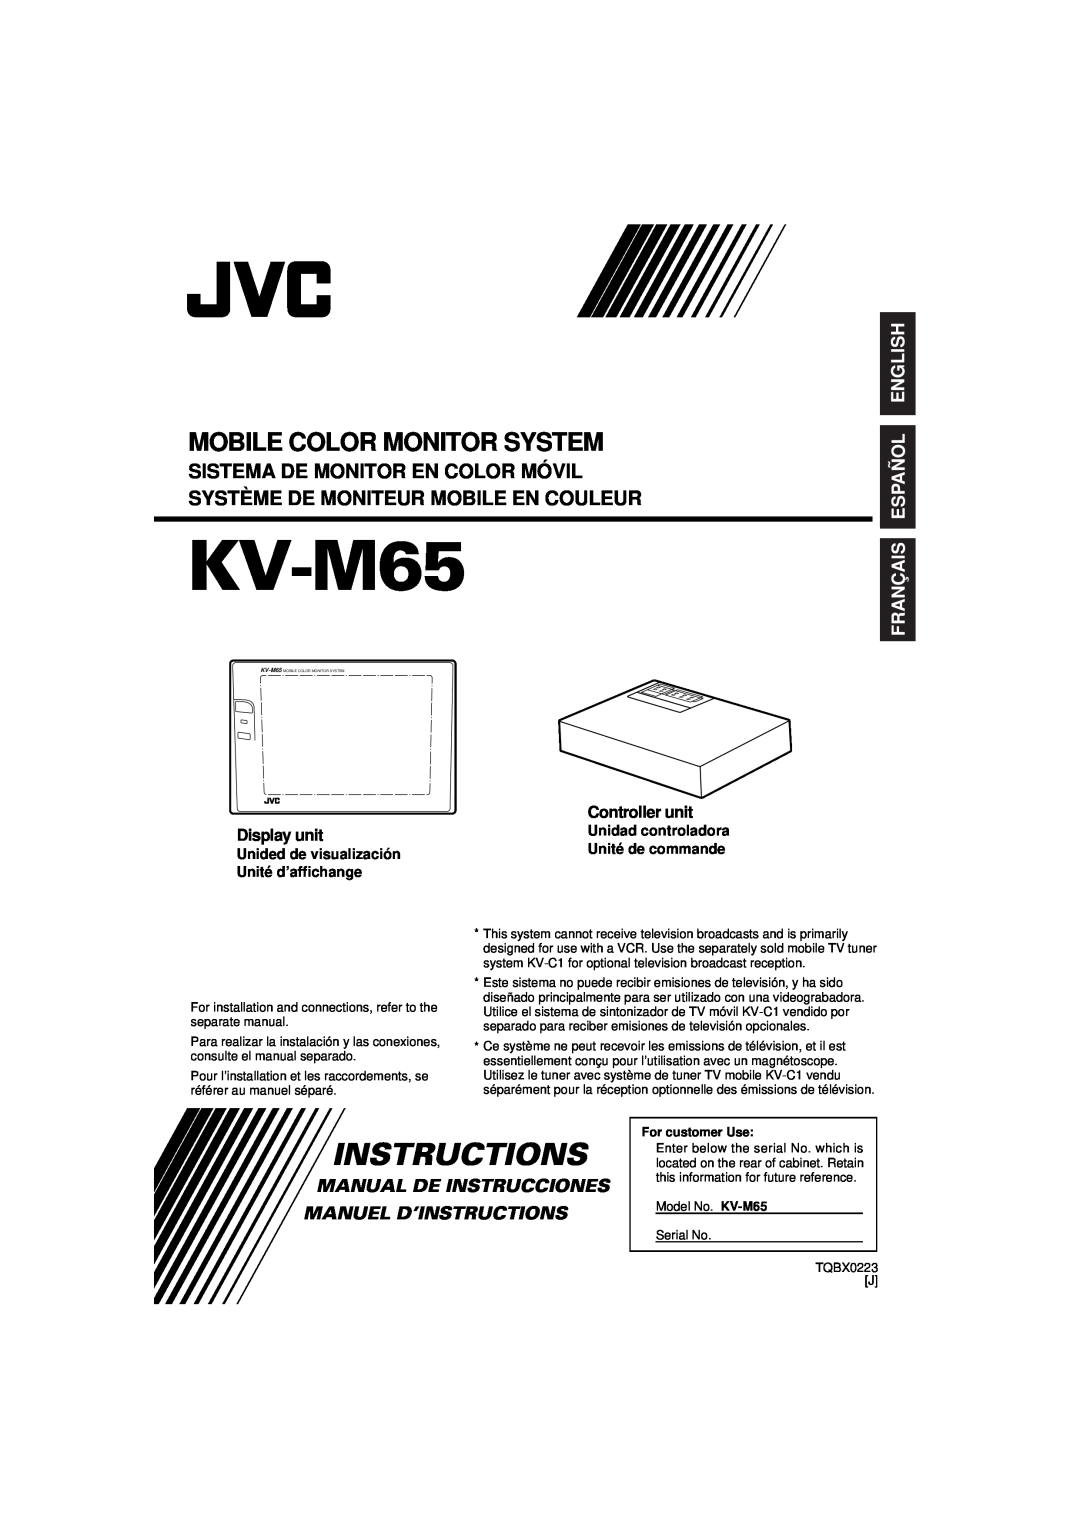 JVC KV-M65 manual Français Español English, Controller unit, Display unit, Instructions, Mobile Color Monitor System 